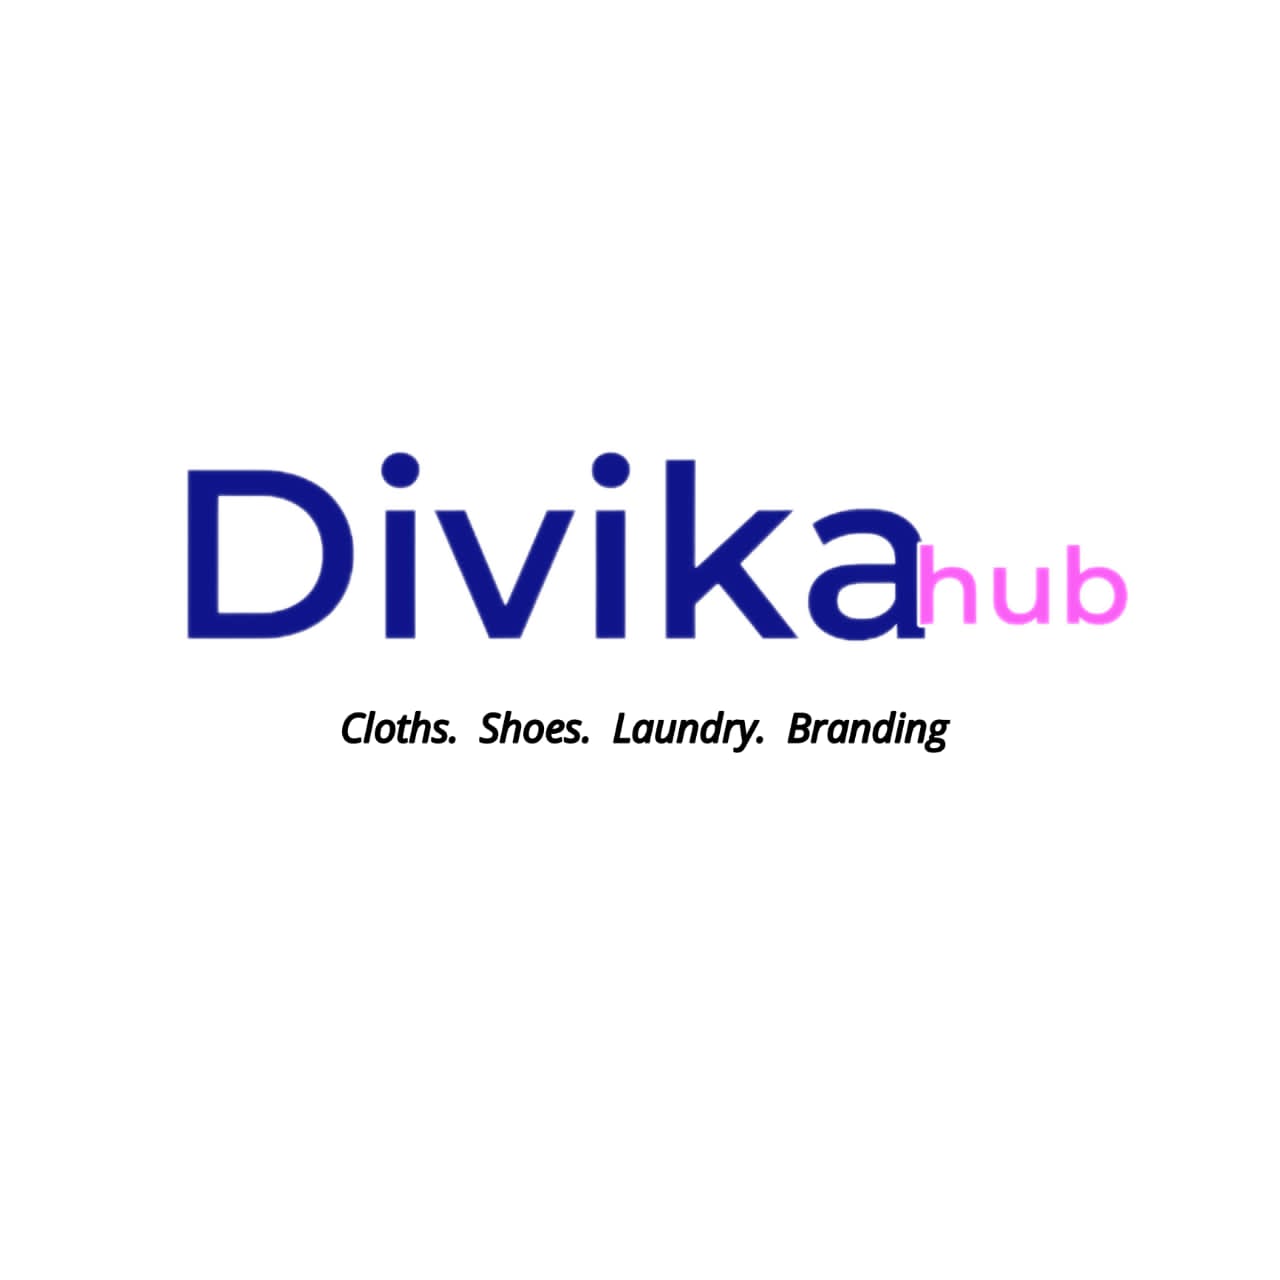 Why You Should Patronize Divika Hub